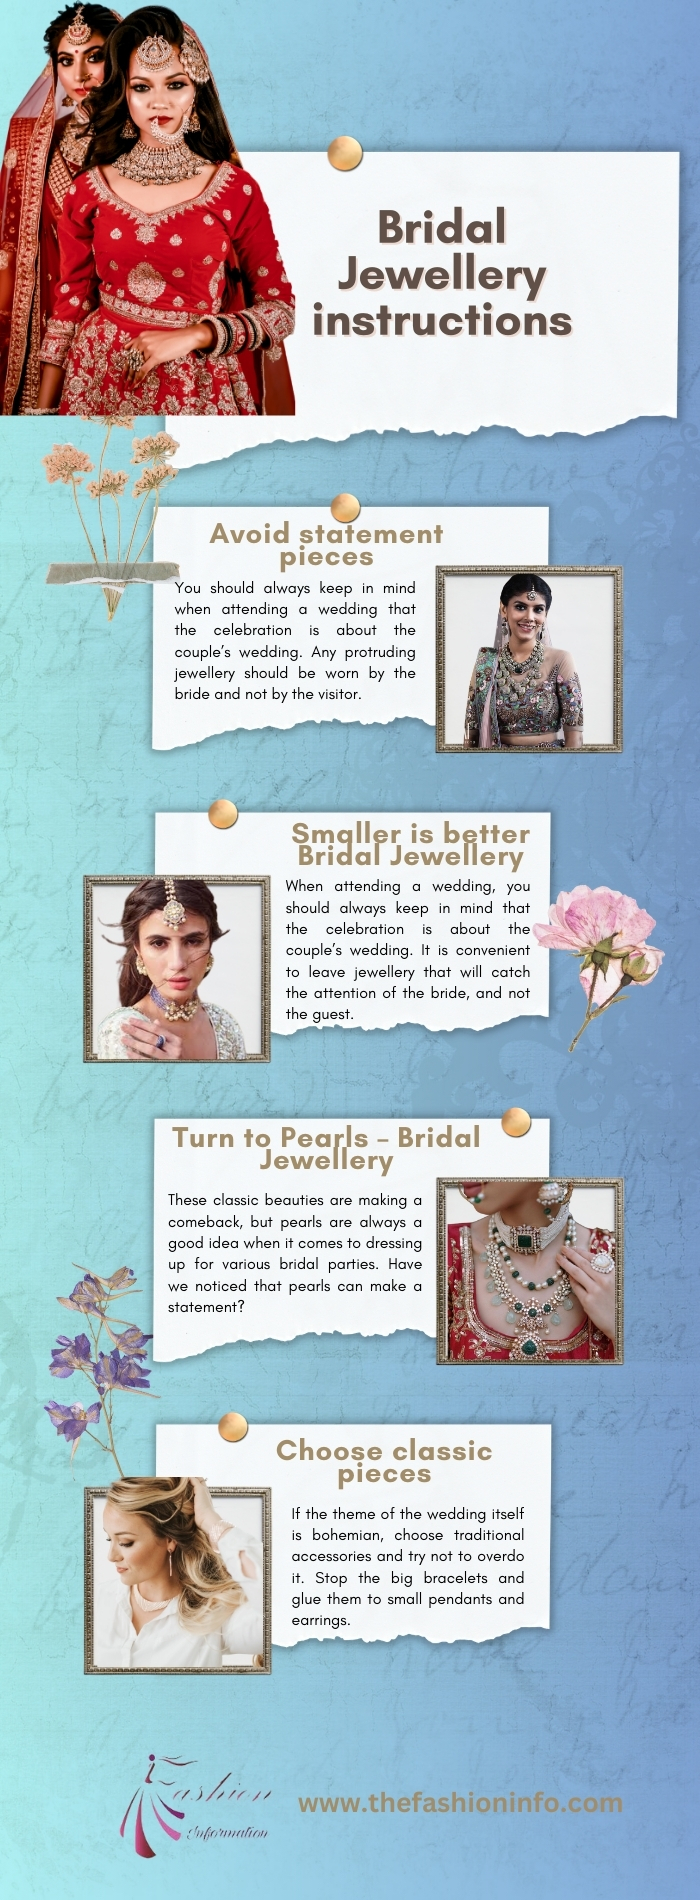 Bridal Jewellery instructions